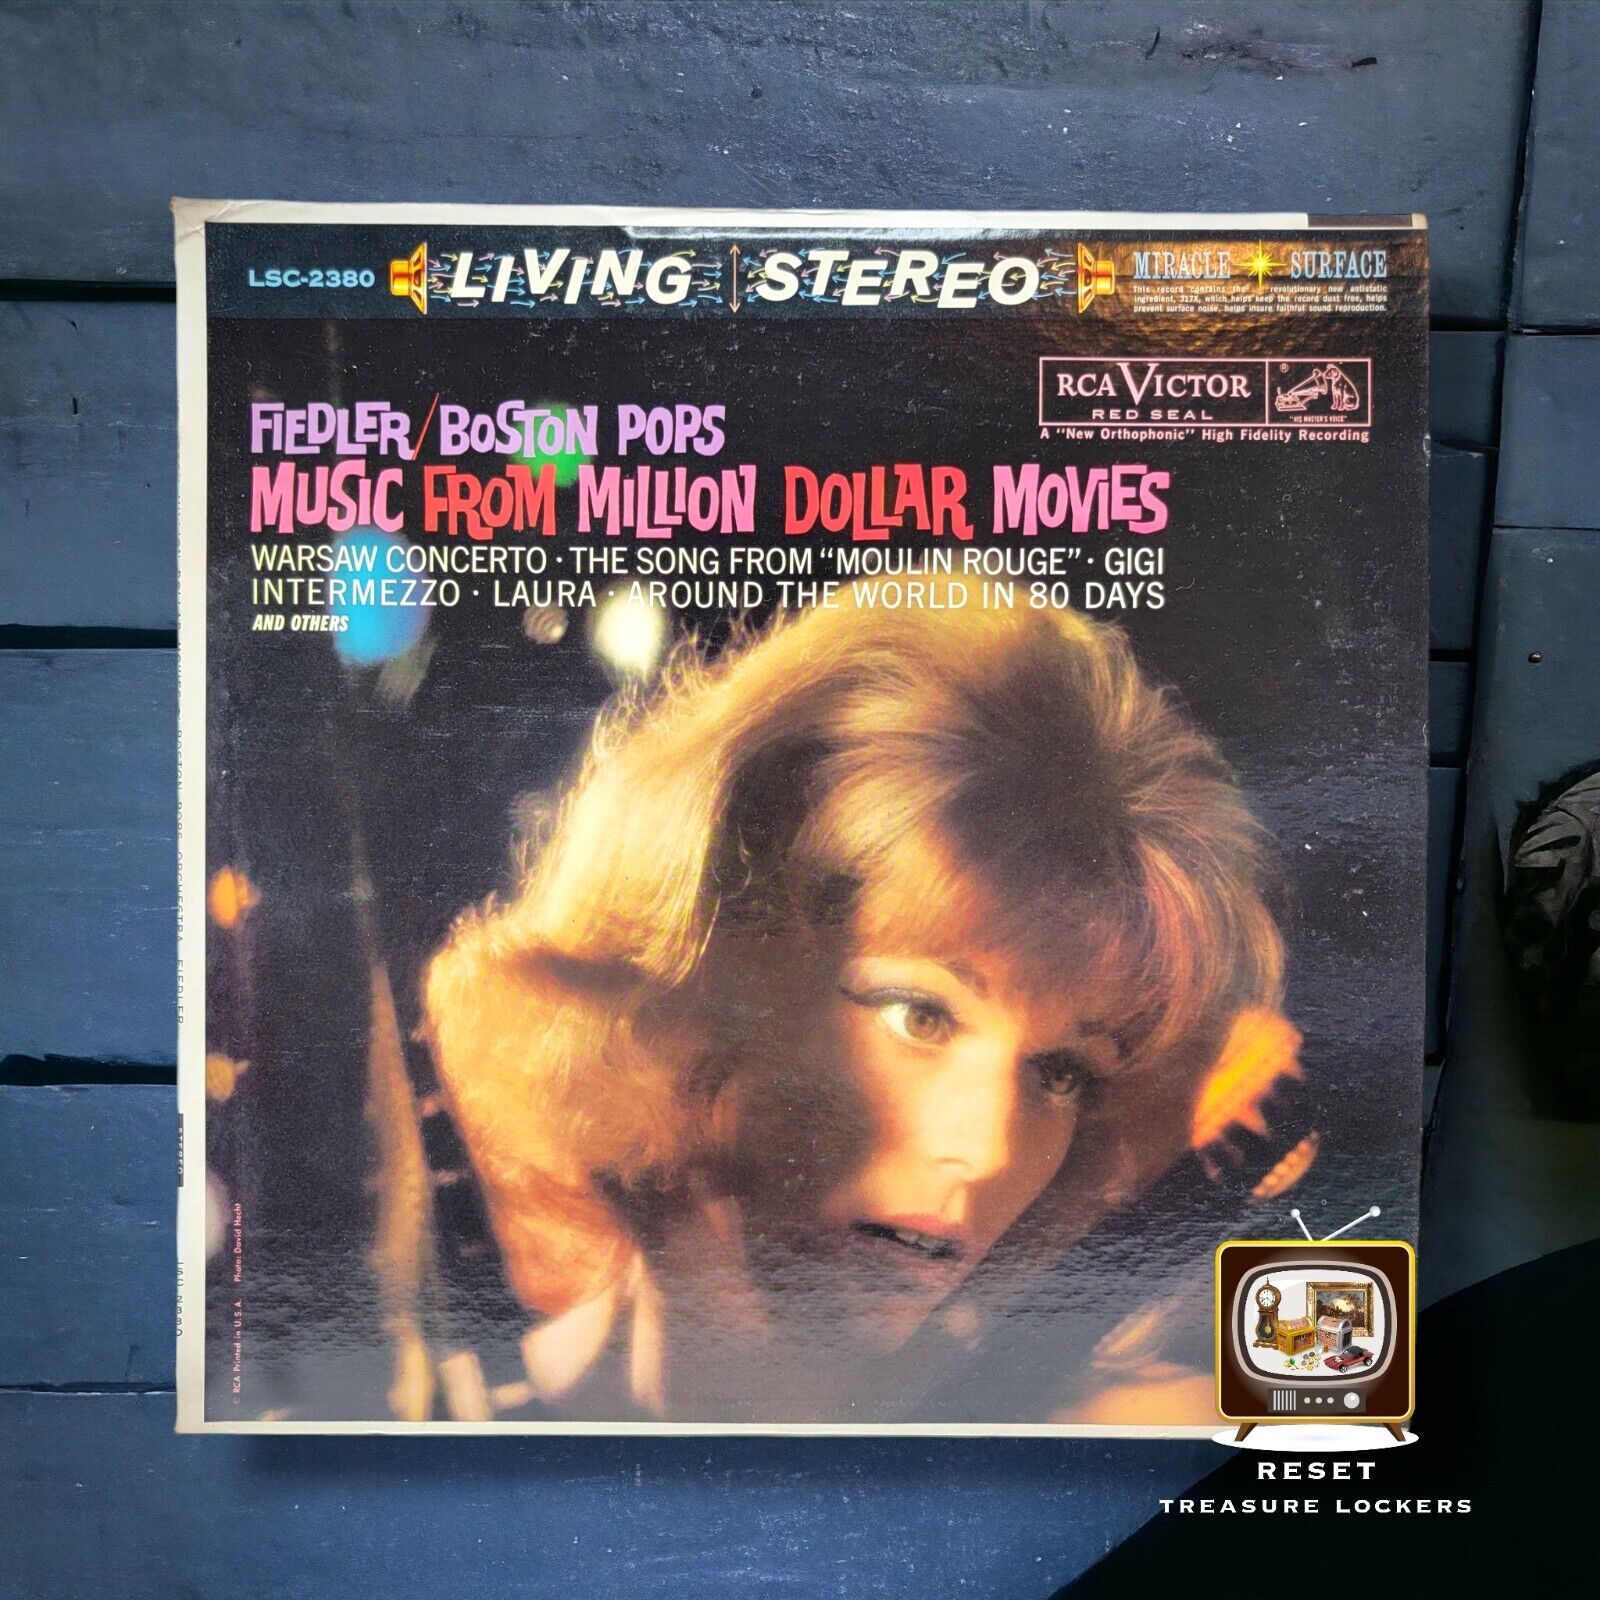 1960 Fiedler/Boston Pops, Music from Million Dollar Movies - Vinyl LP LSC-2380